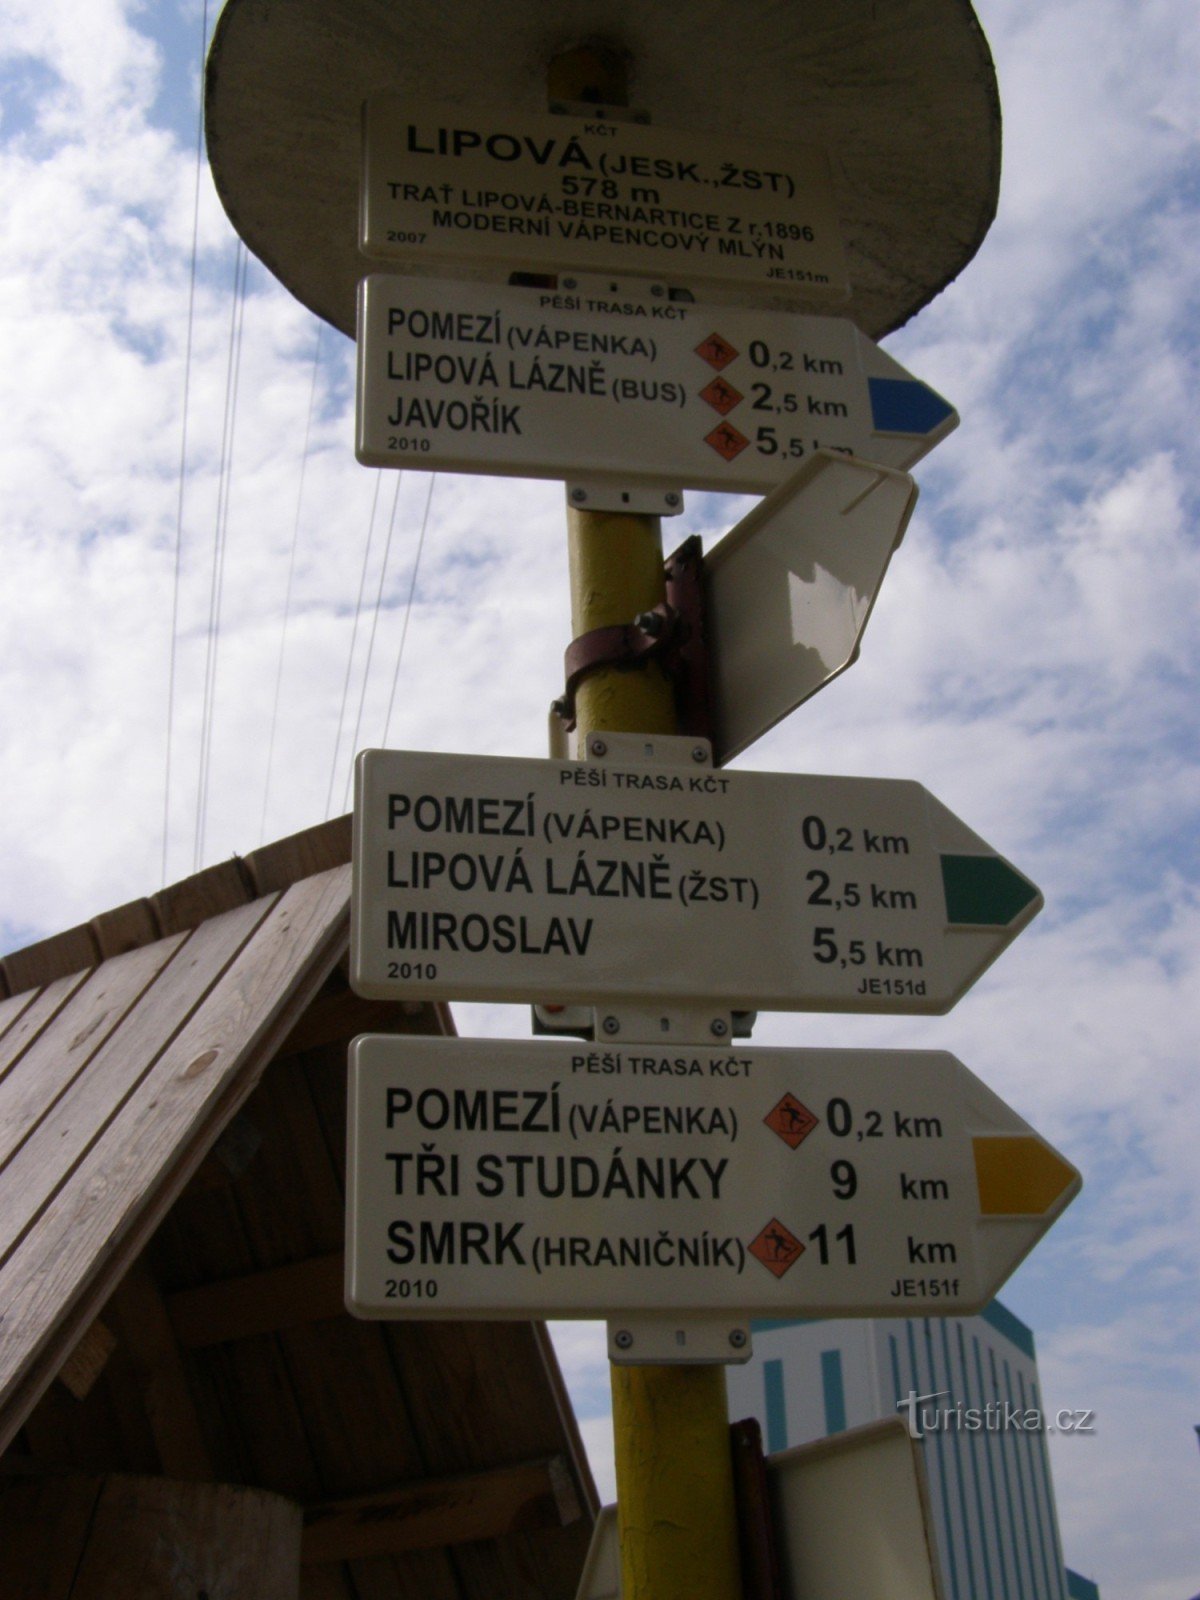 toeristisch knooppunt Lipová - spoorweg